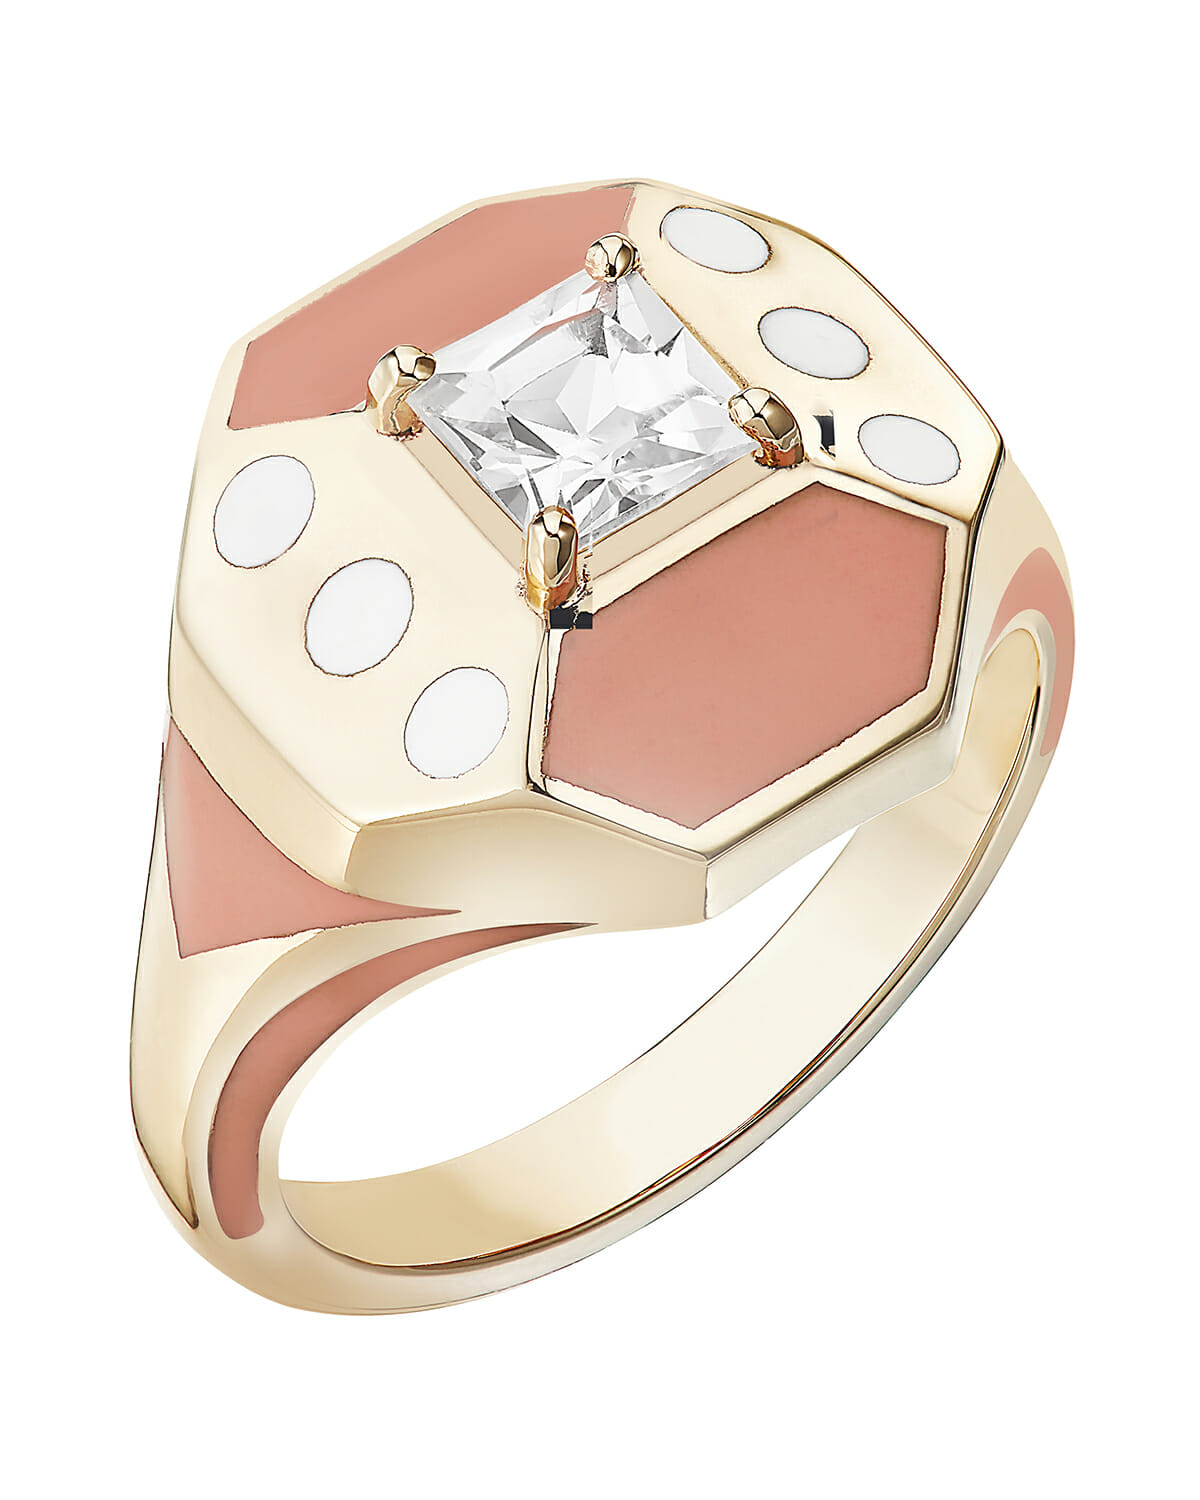 Alice Cicolini Colorful Enamel Diamond Ring engagement ring ideas jewelry designer